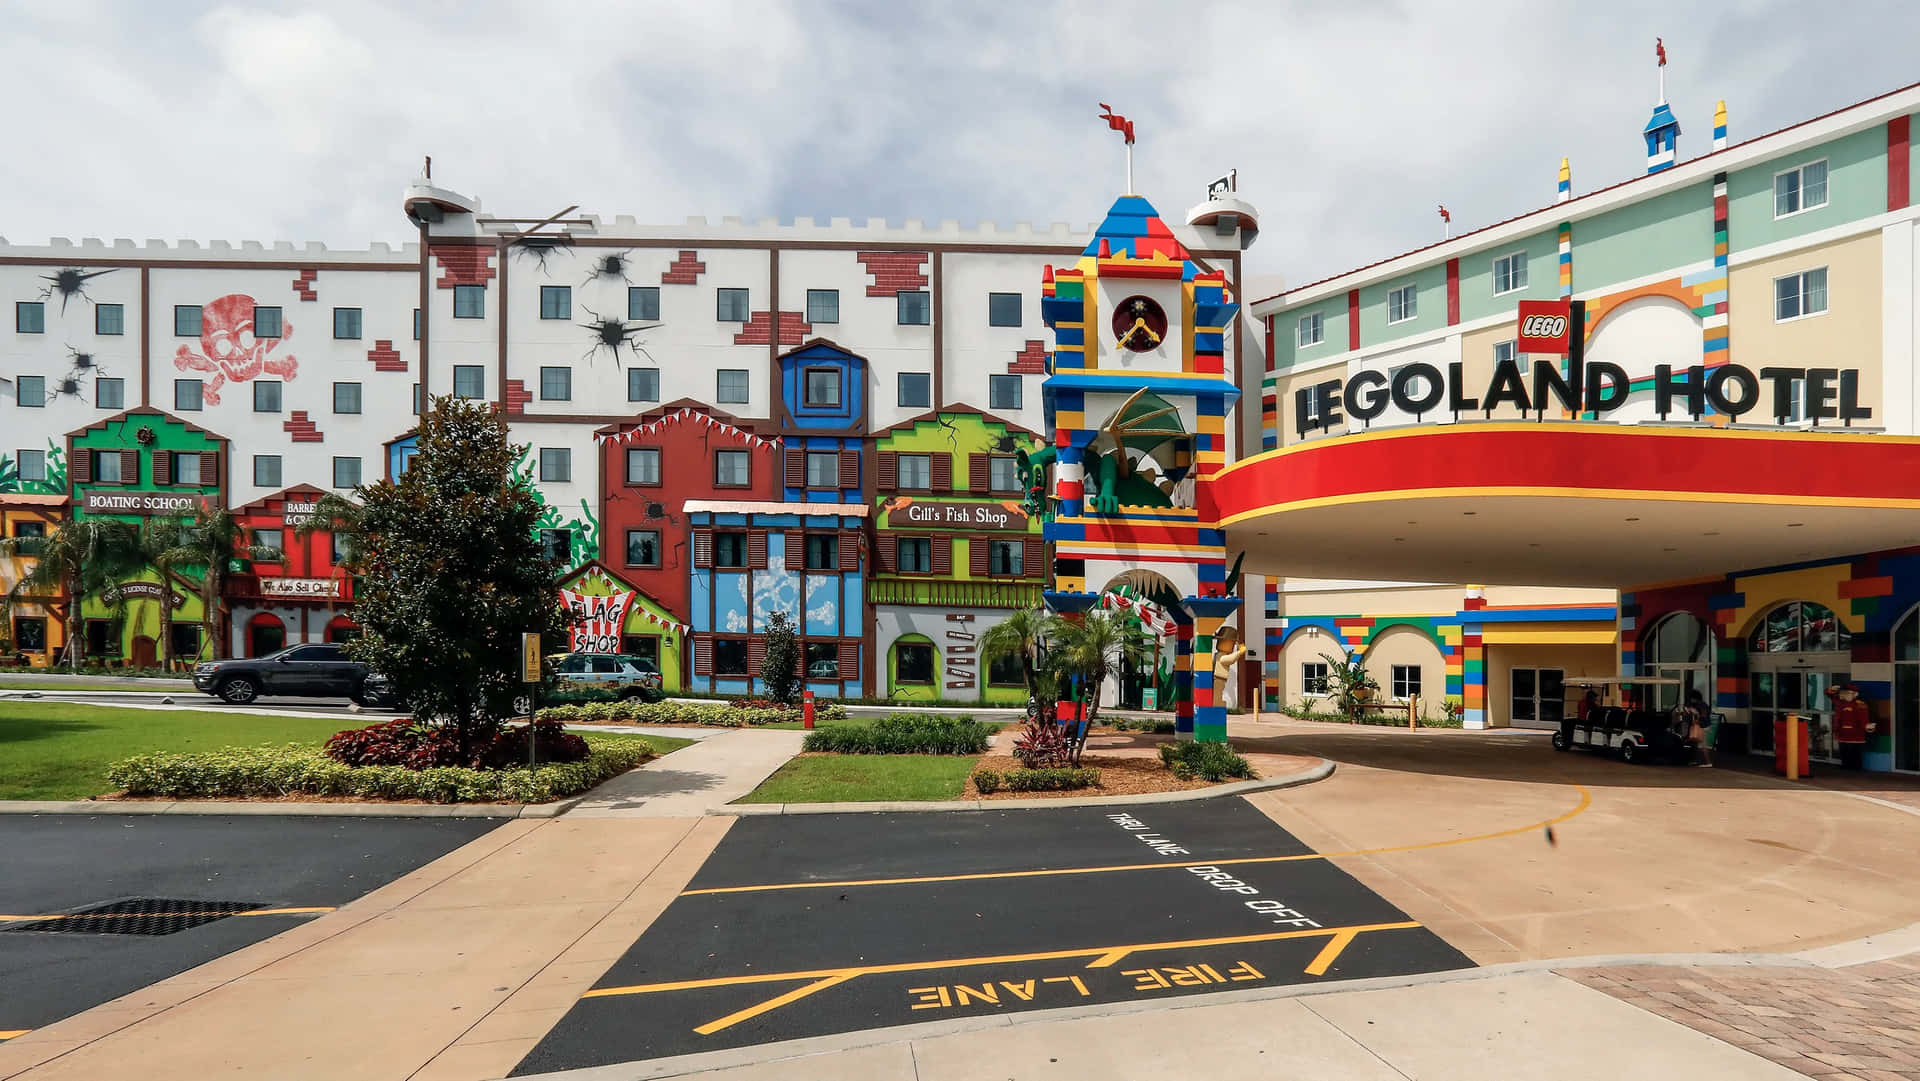 "Explore the fun that awaits you at Legoland!"